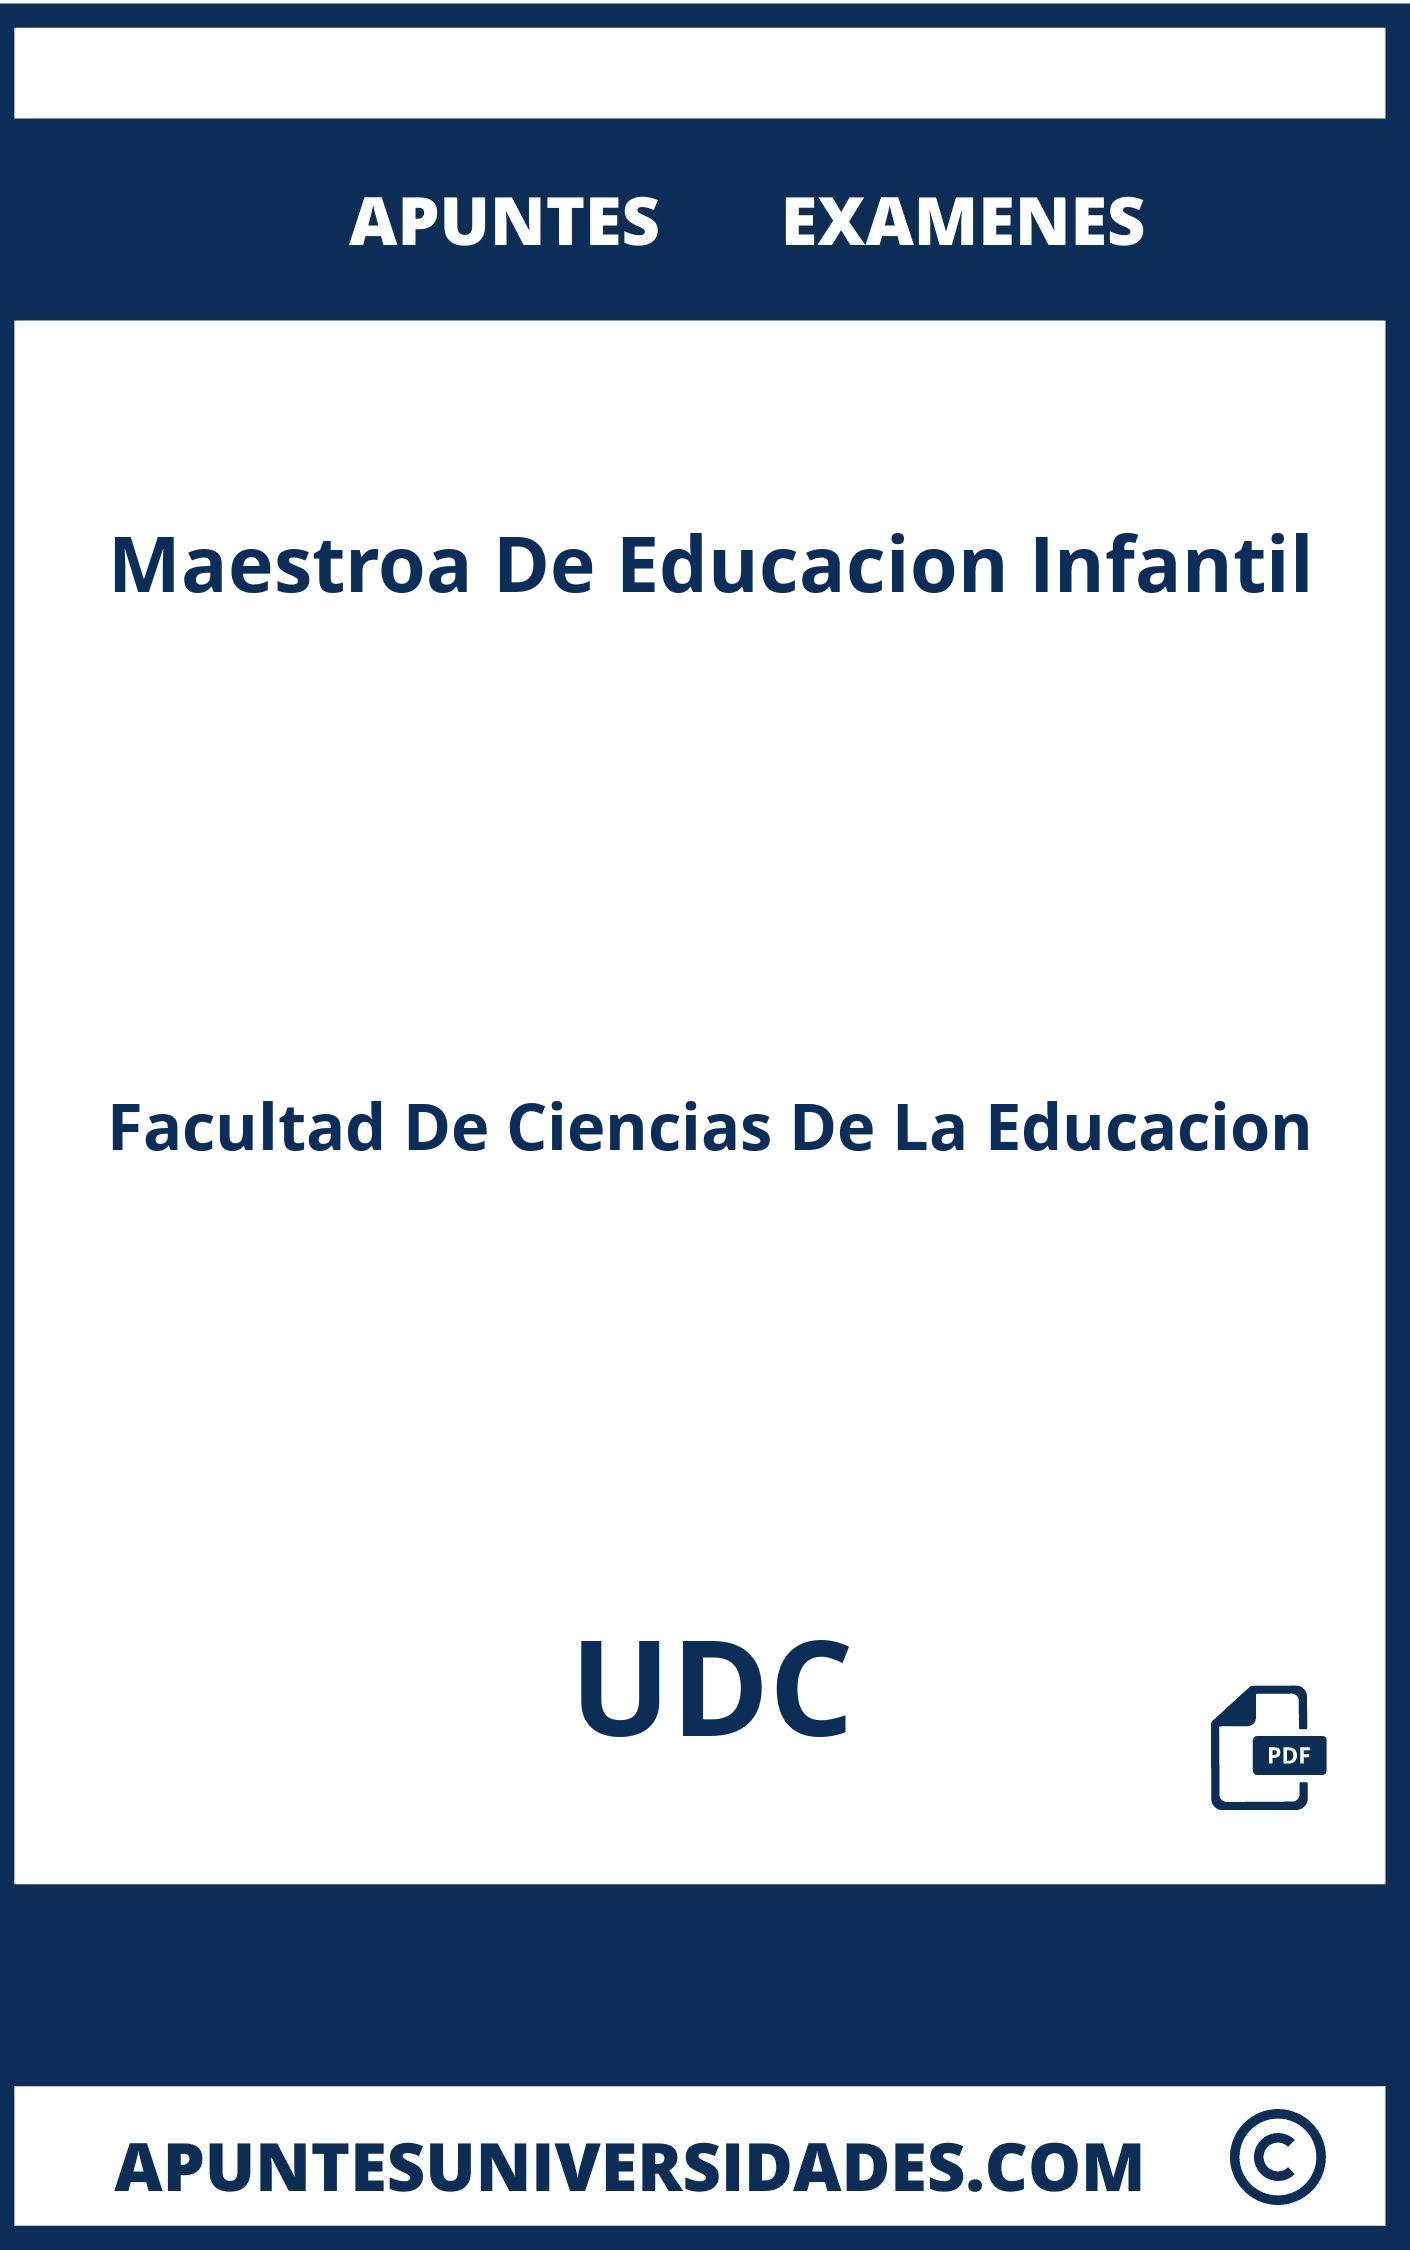 Examenes Apuntes Maestroa De Educacion Infantil UDC